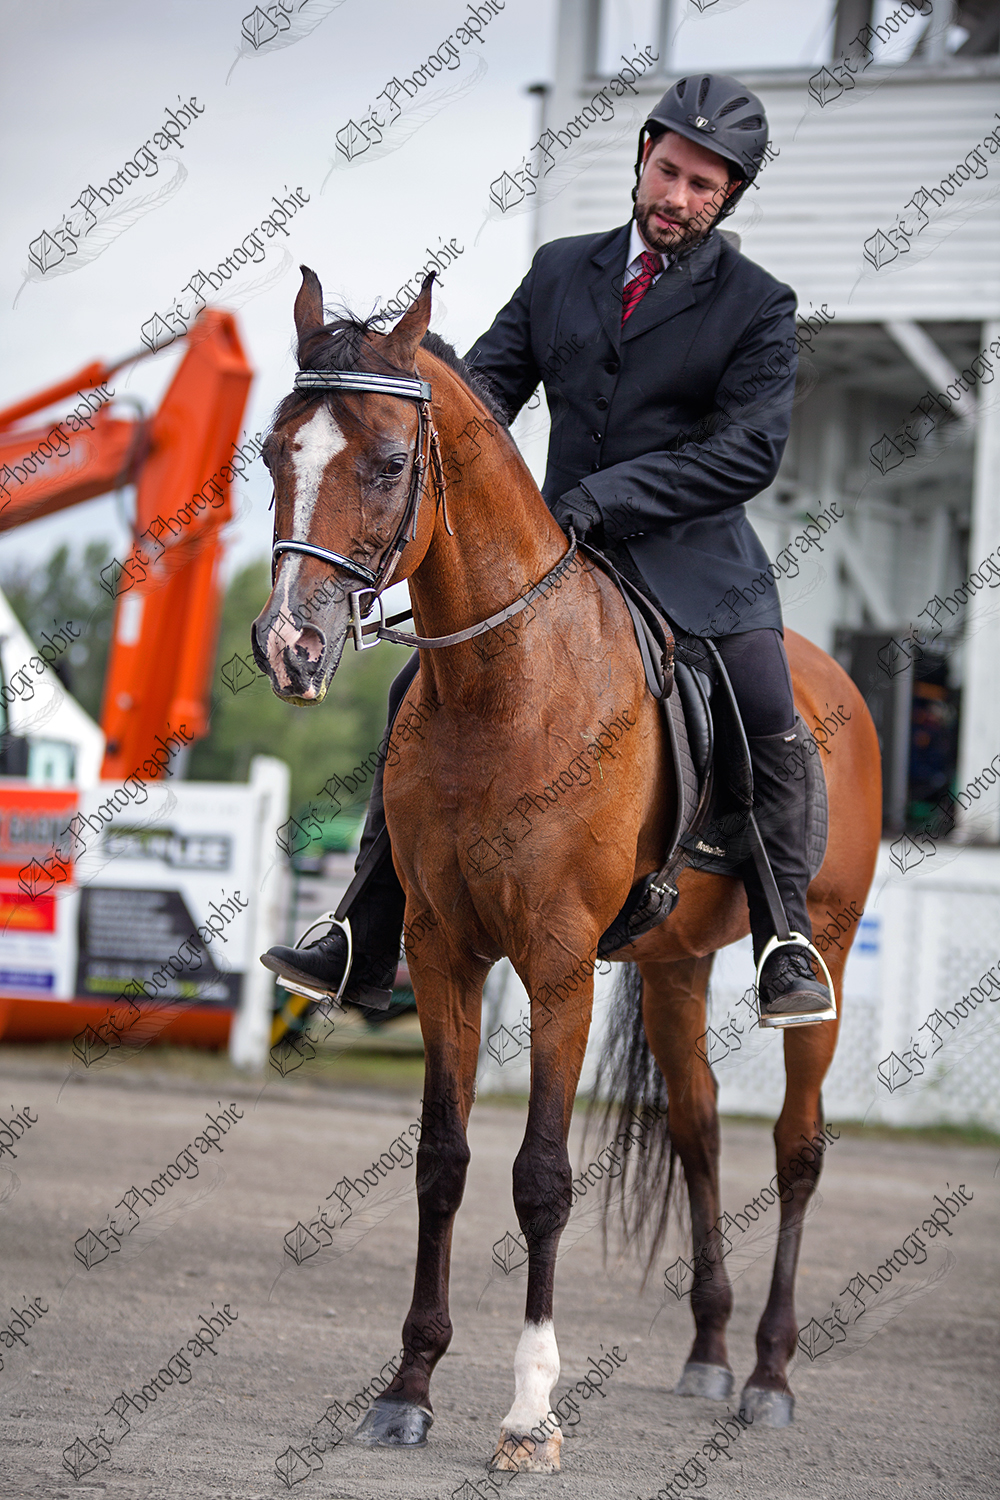 elze_photo_5619_arret_cheval_profil_rider_lineup_competition